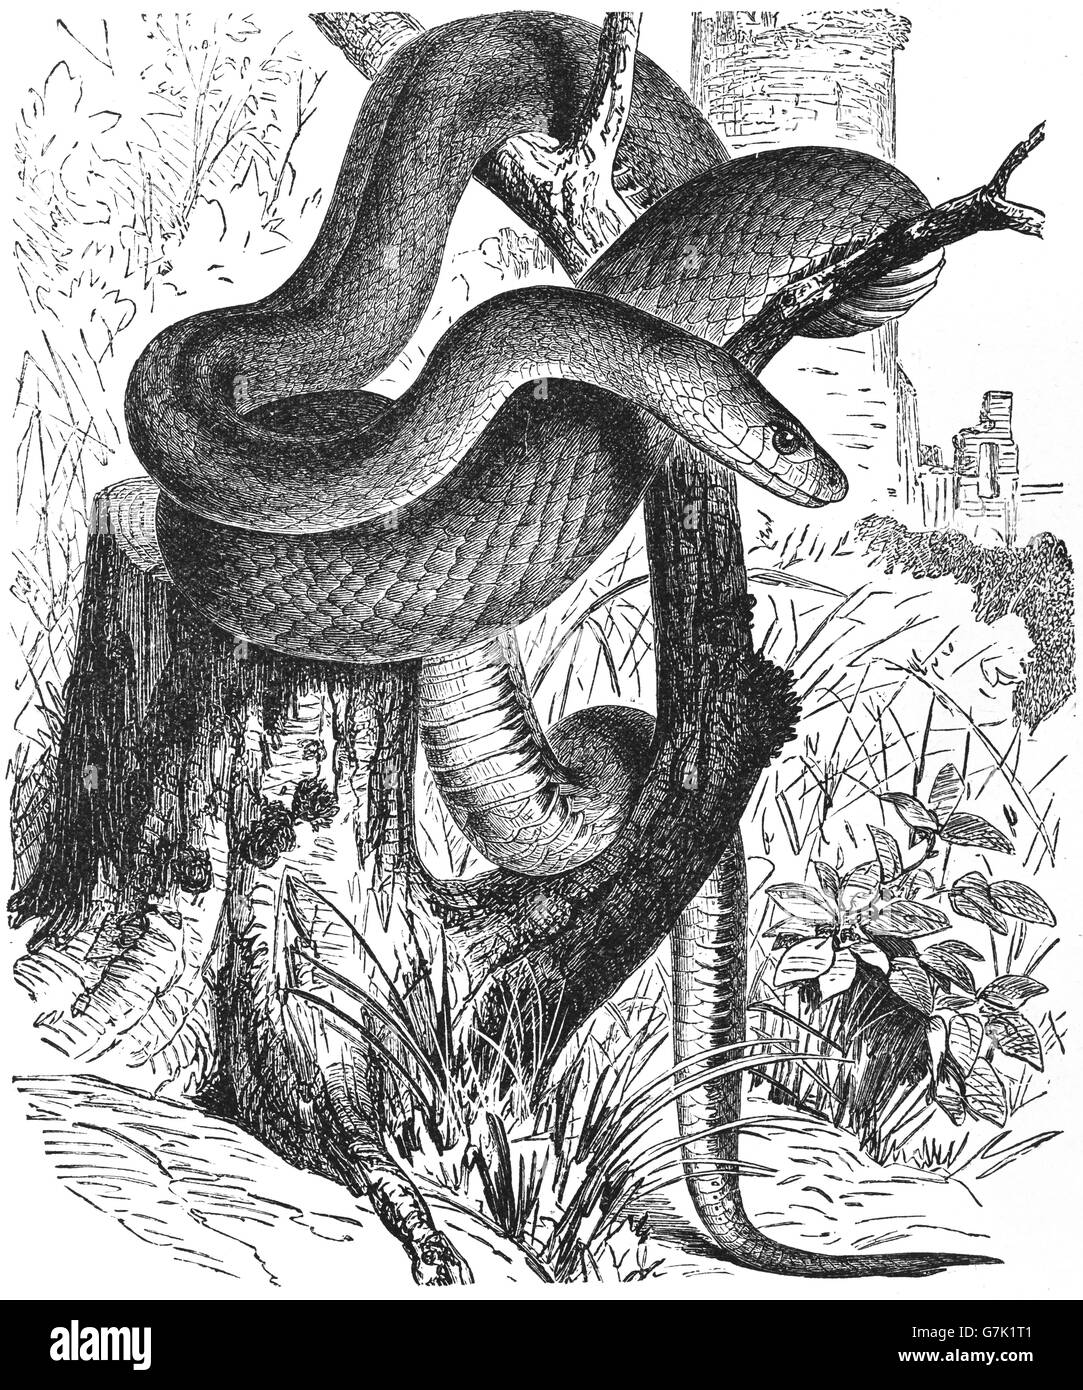 Saettone, Zamenis longissimus, Elaphe longissima, illustrazione dal libro datato 1904 Foto Stock